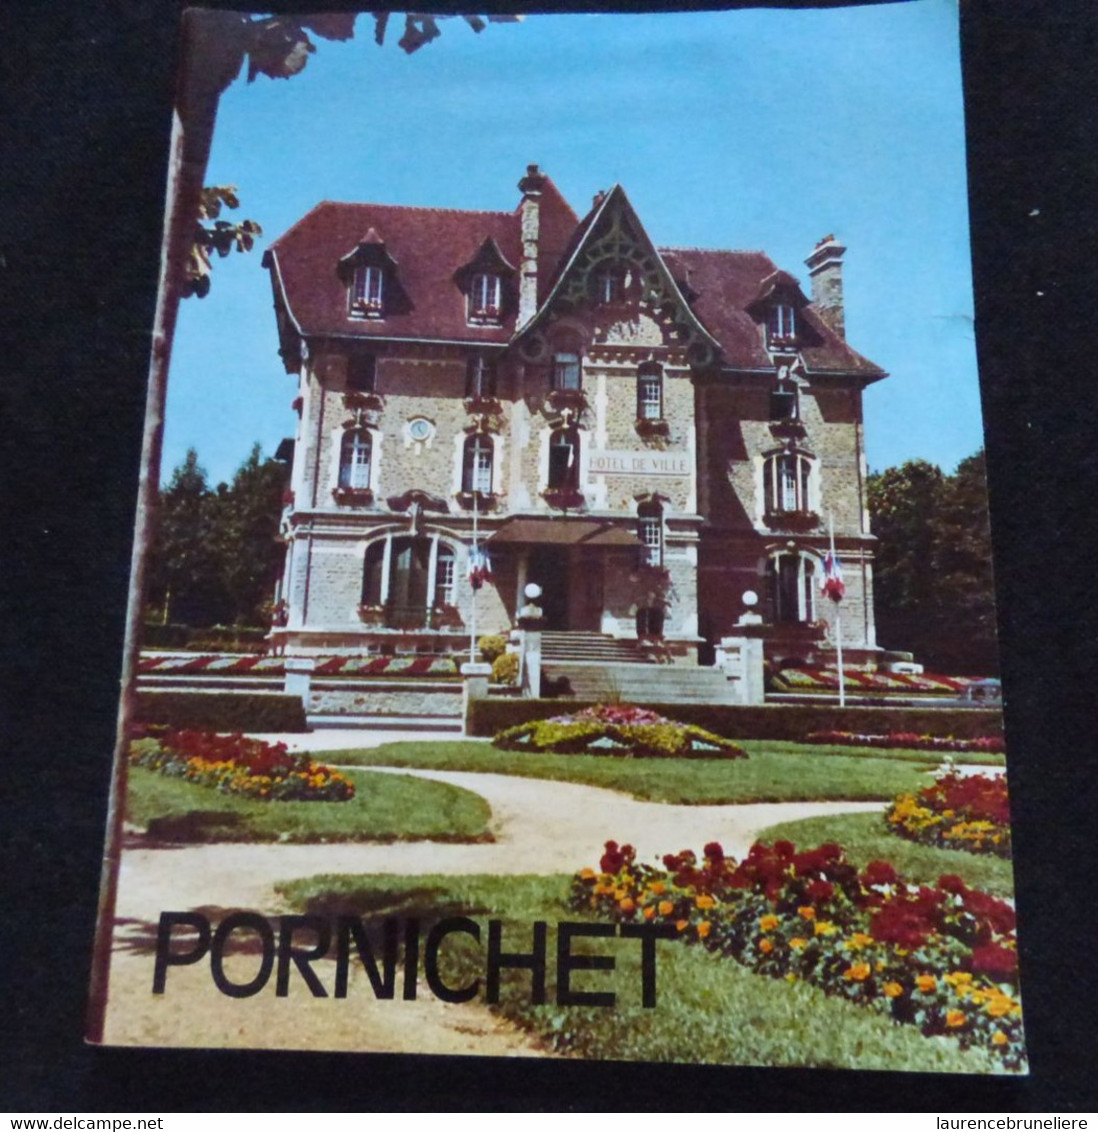 44 -   PORNICHET  - BULLETIN MUNICIPAL  1971 - Toeristische Brochures